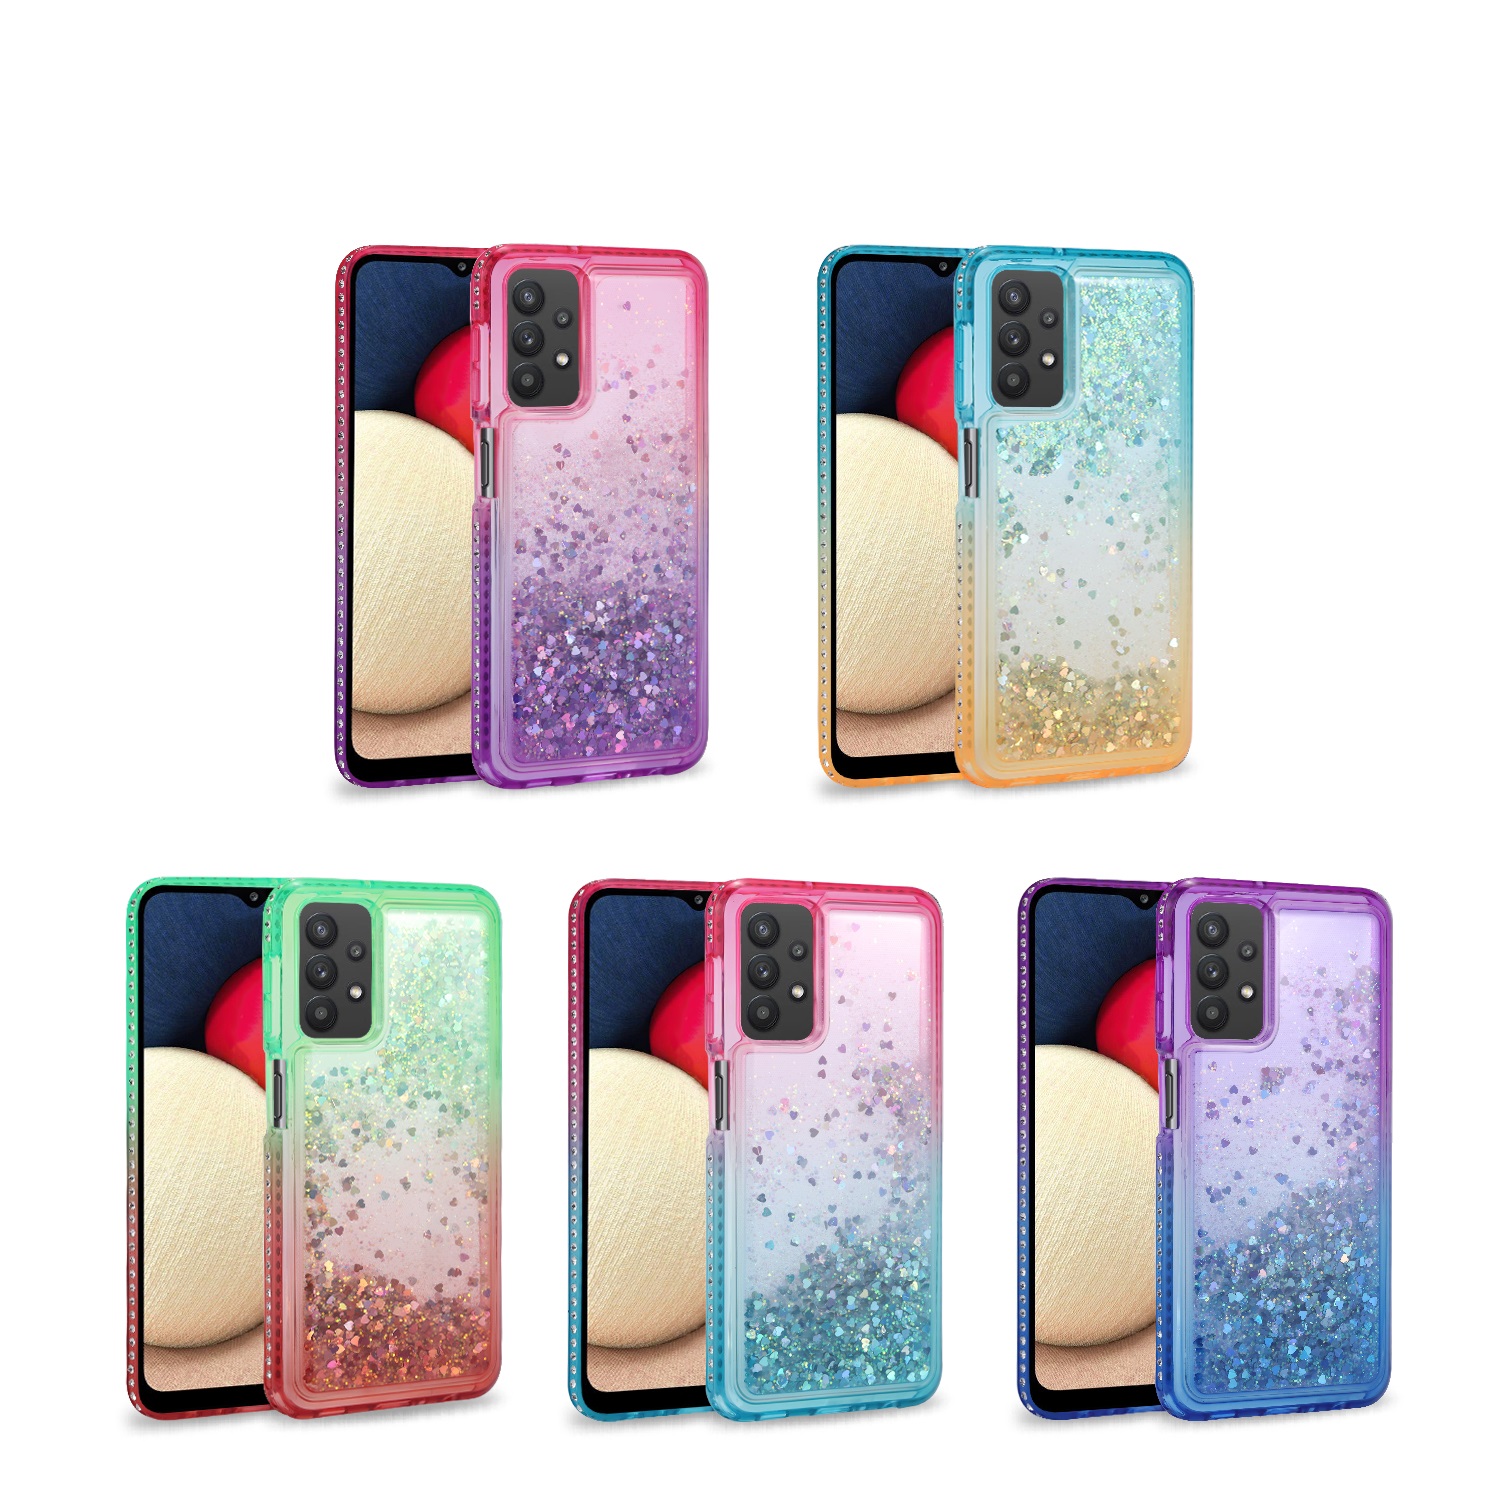 Samsung Galaxy A32 5G Phone Case, Slim Liquid Glitter Dual Colors Stylish for Samsung Galaxy A32 5G Phone Case Pink/Blue - image 4 of 4